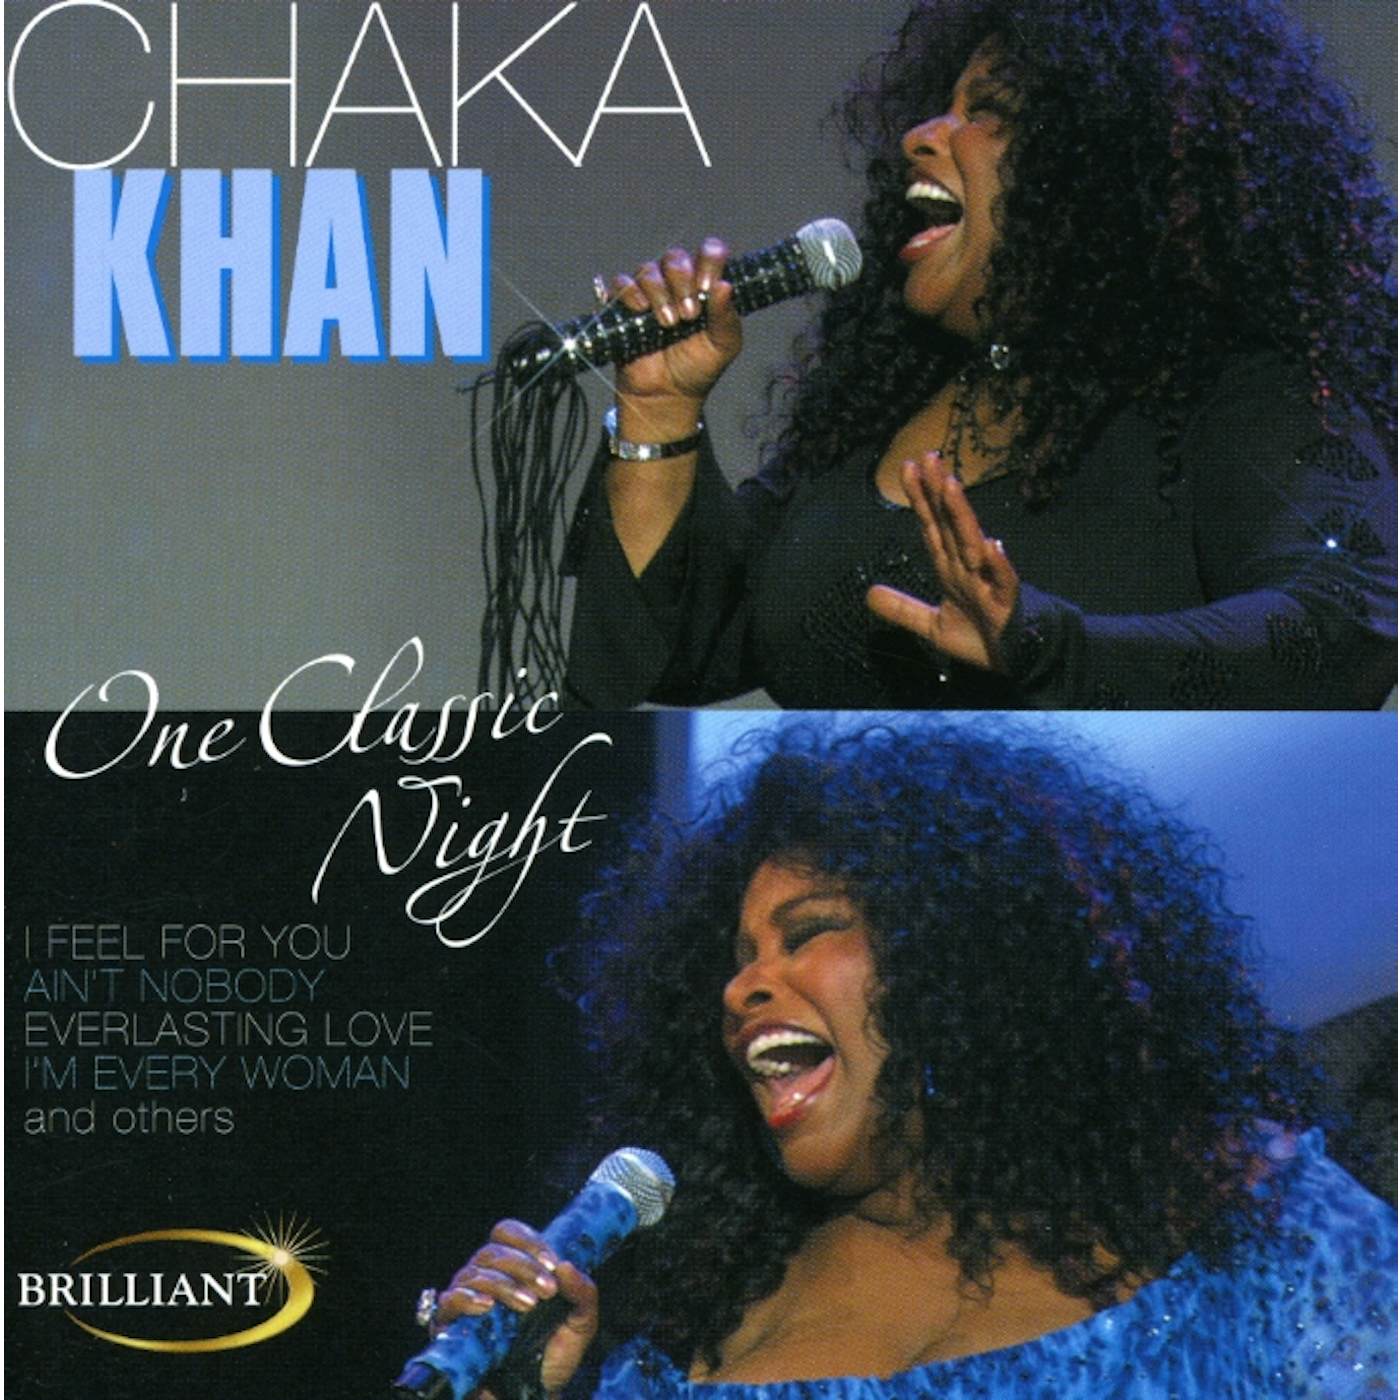 Chaka Khan ONE CLASSIC NIGHT CD